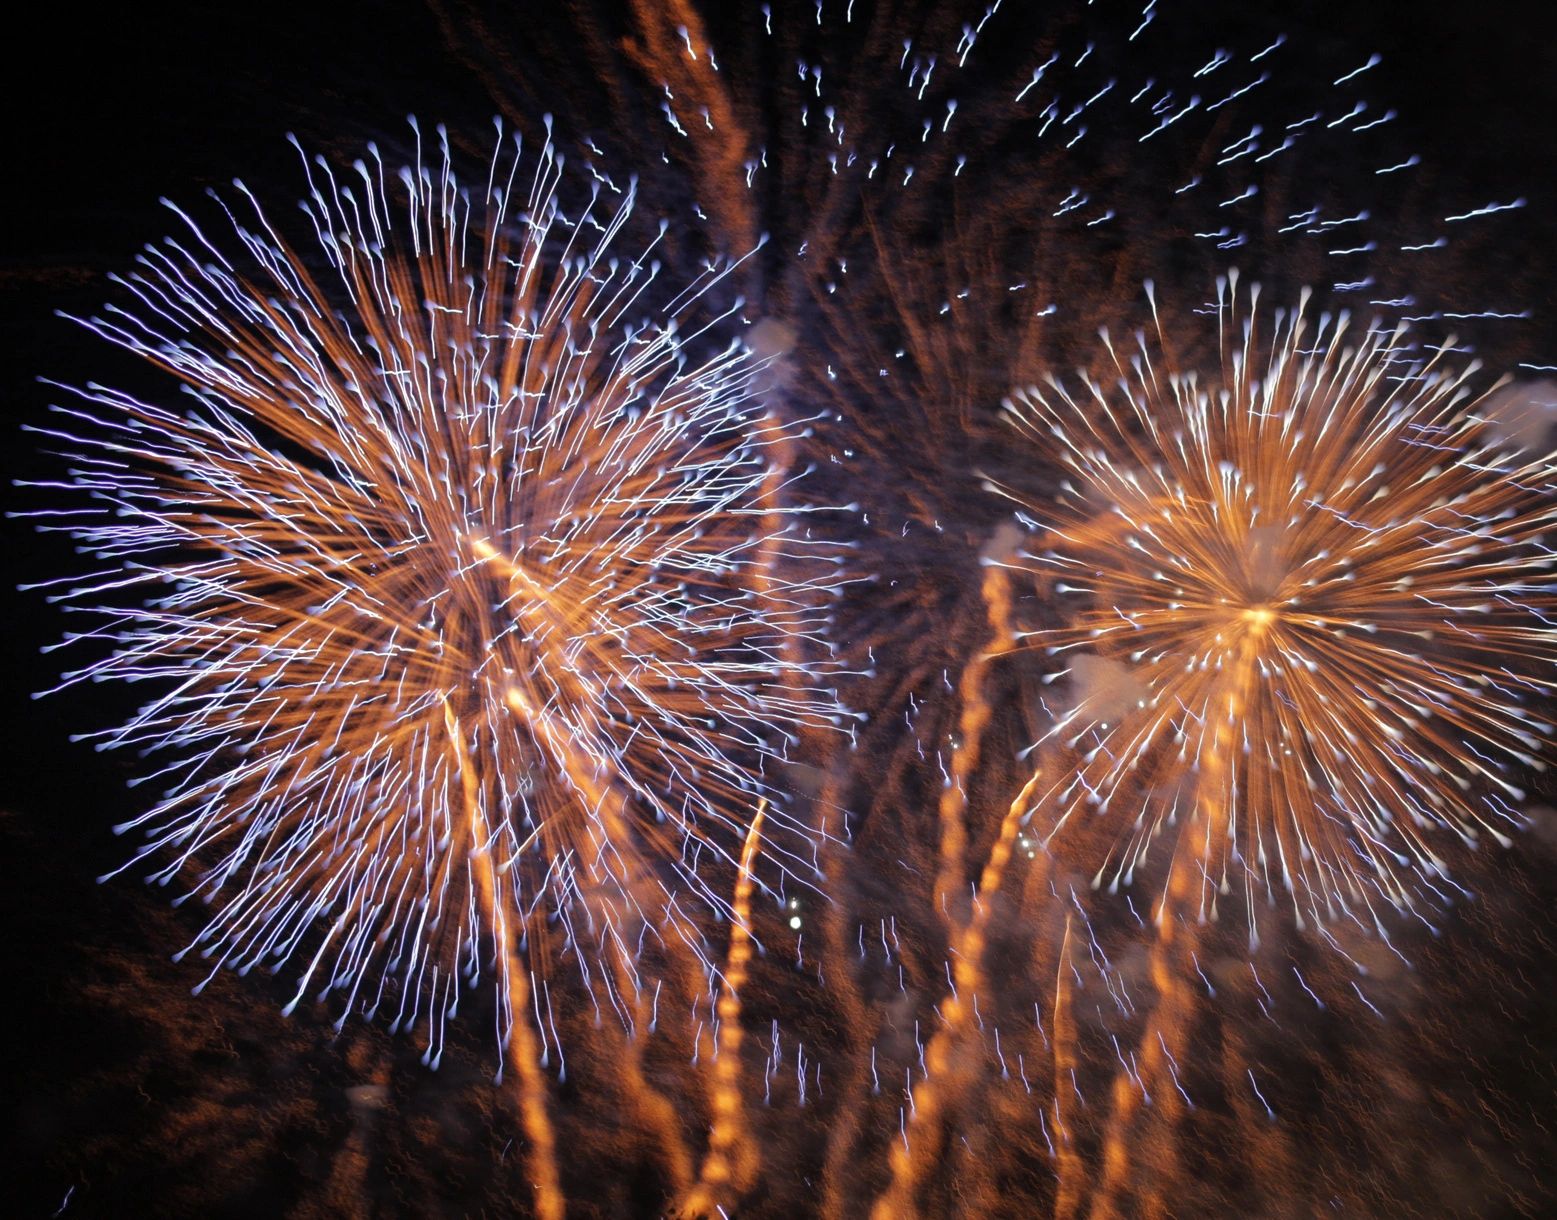 Destin, Okaloosa Island Fireworks. 